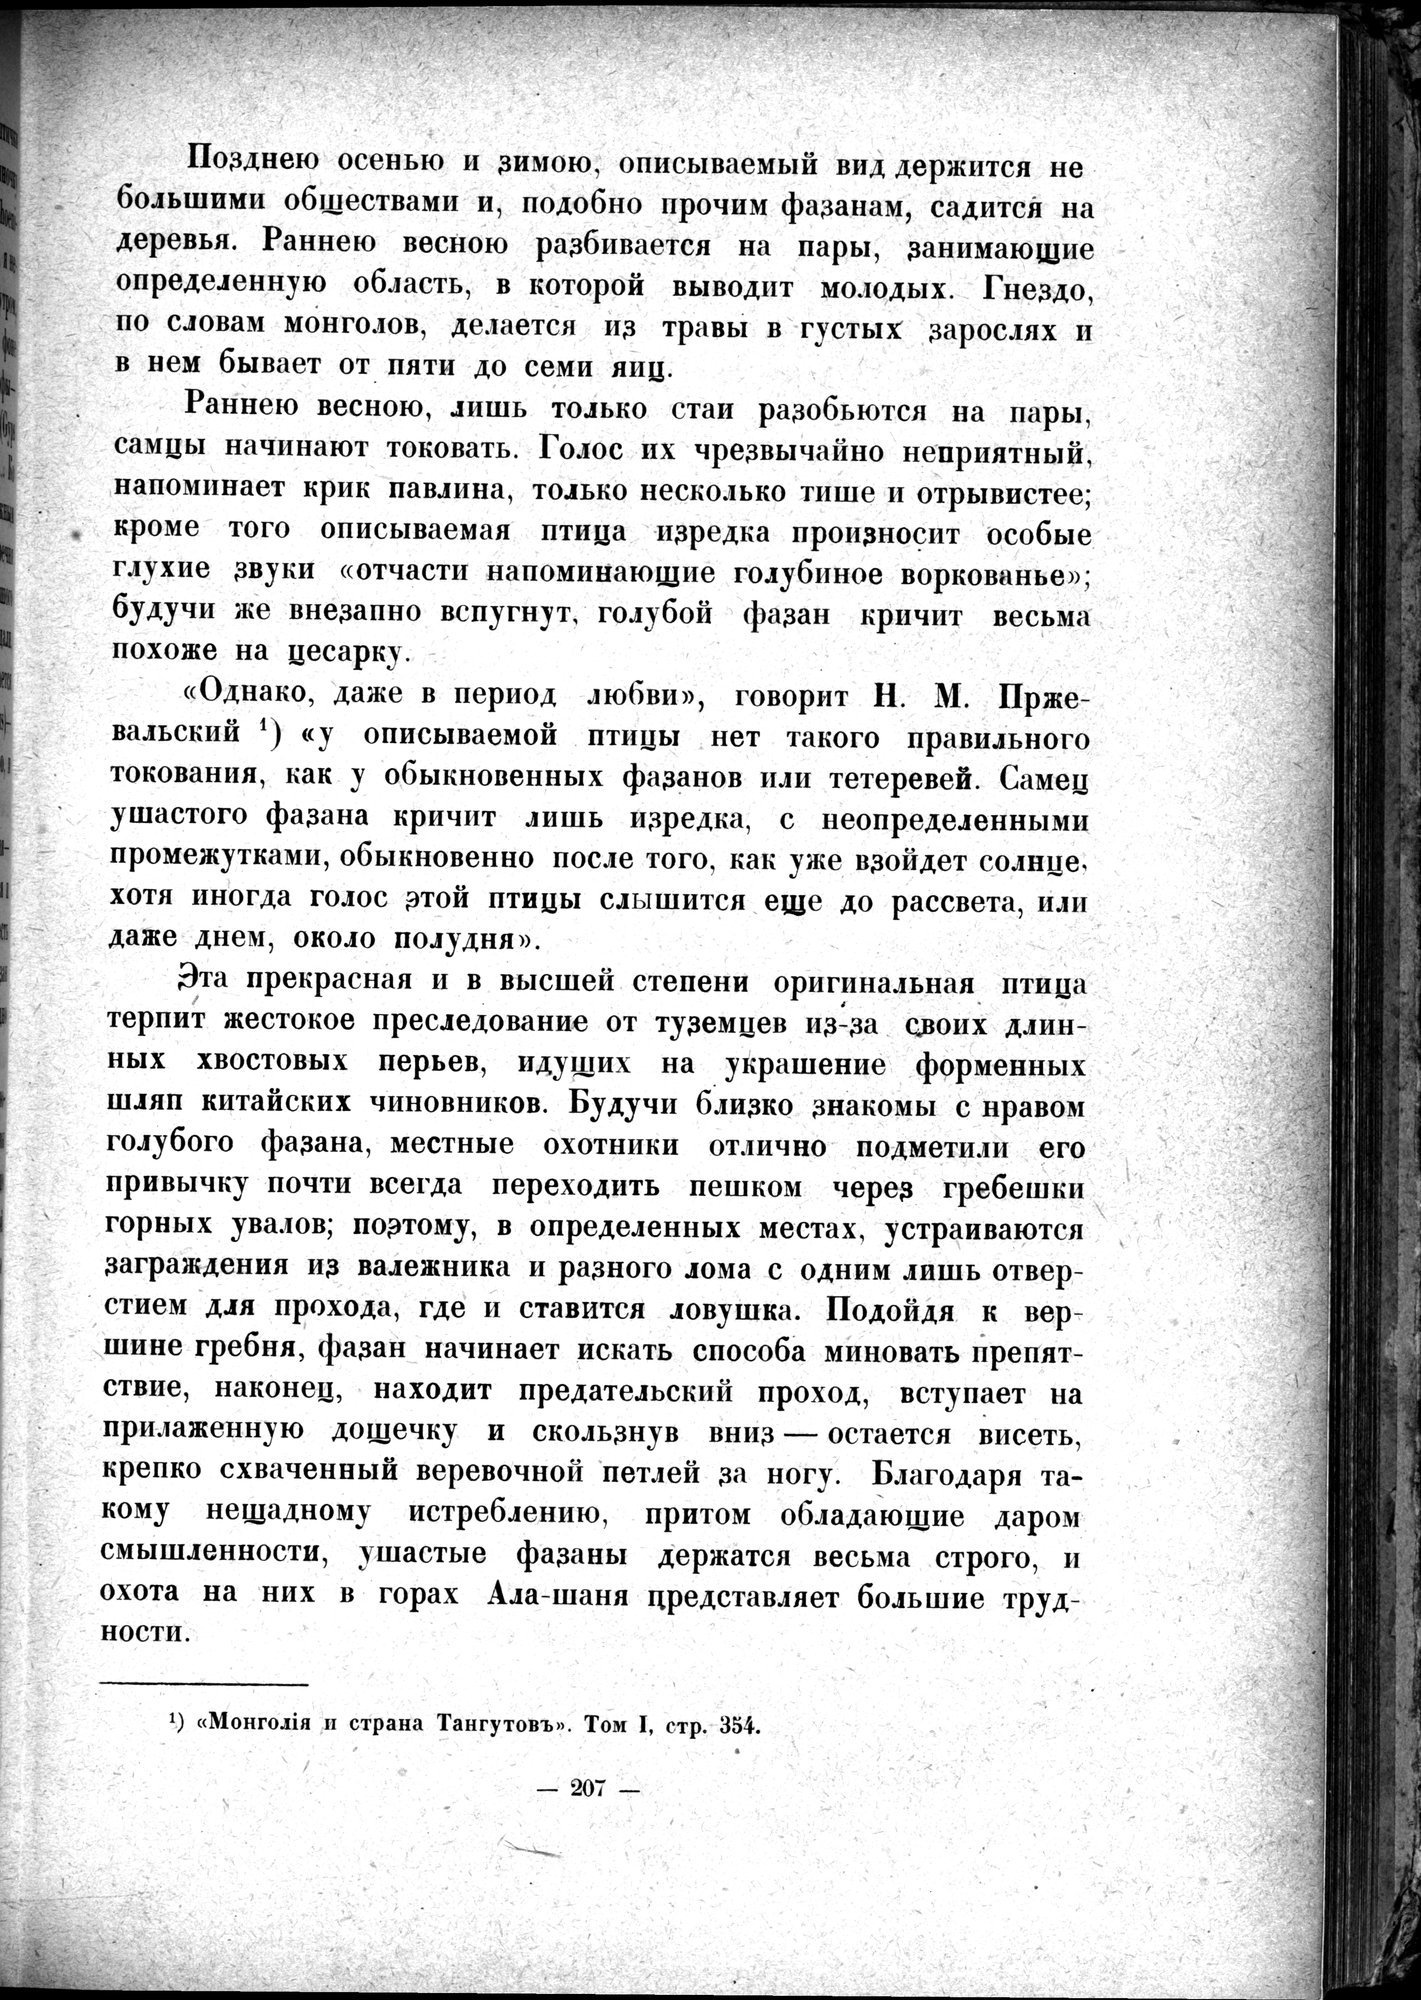 Mongoliya i Amdo i mertby gorod Khara-Khoto : vol.1 / Page 247 (Grayscale High Resolution Image)